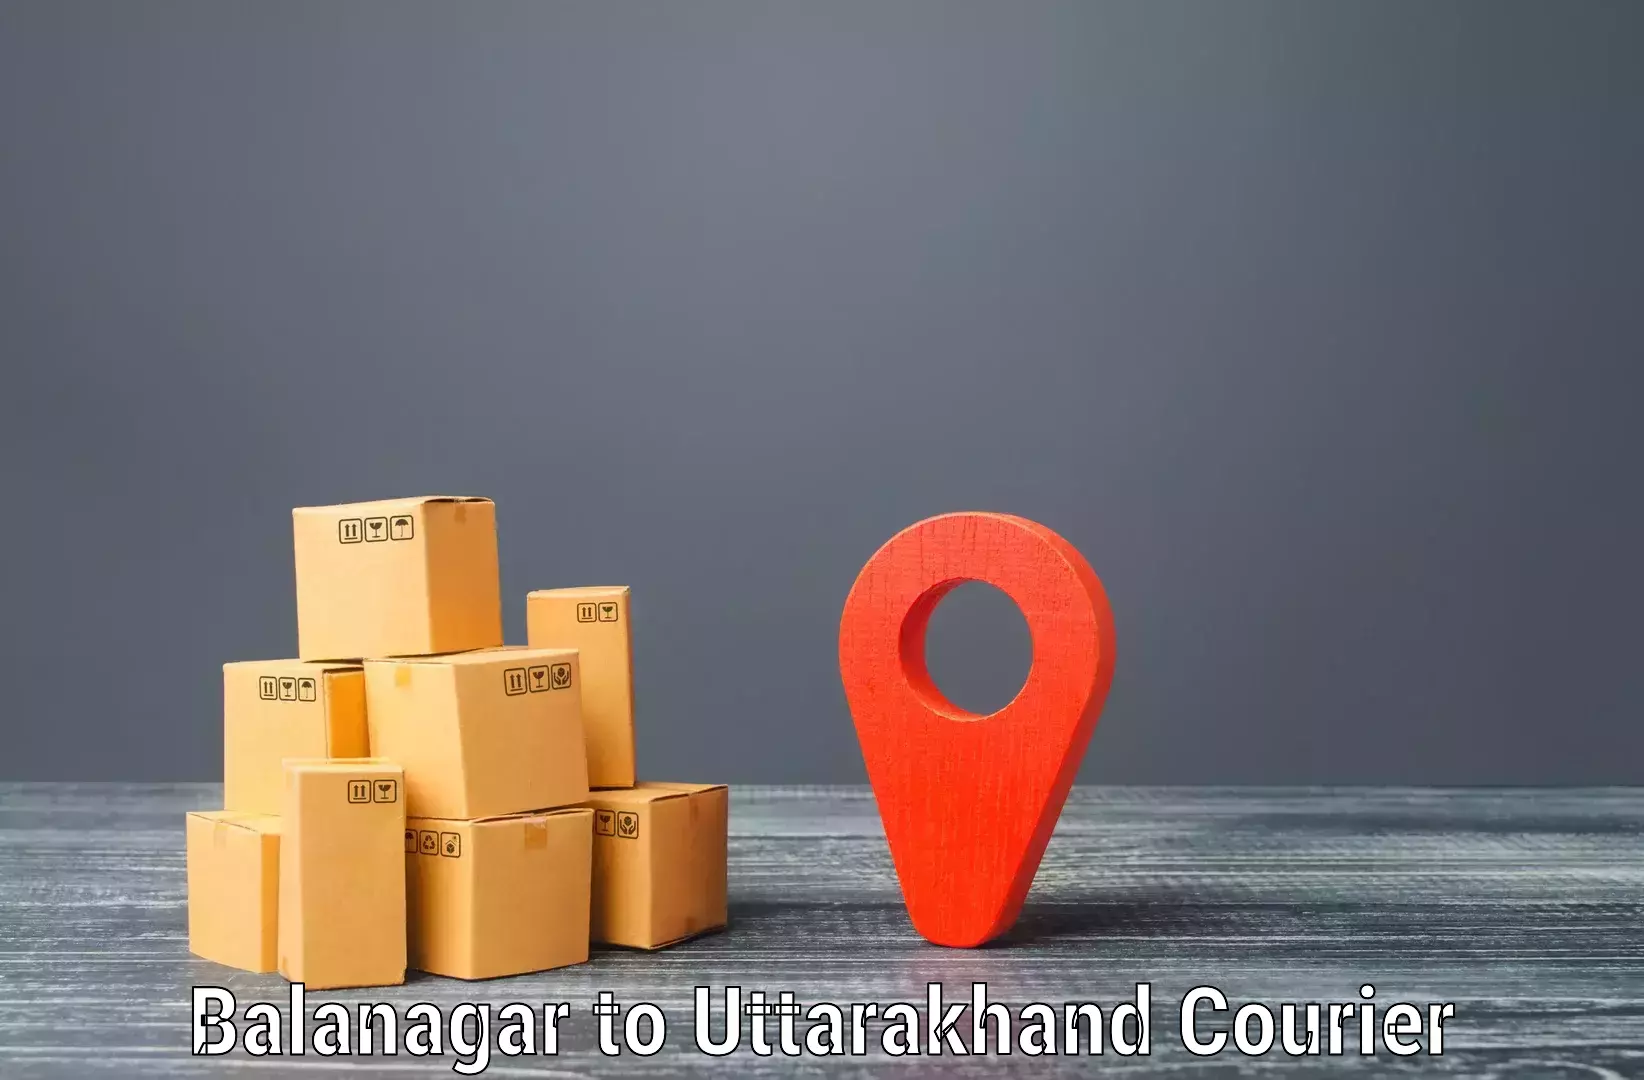 On-demand shipping options Balanagar to Pithoragarh